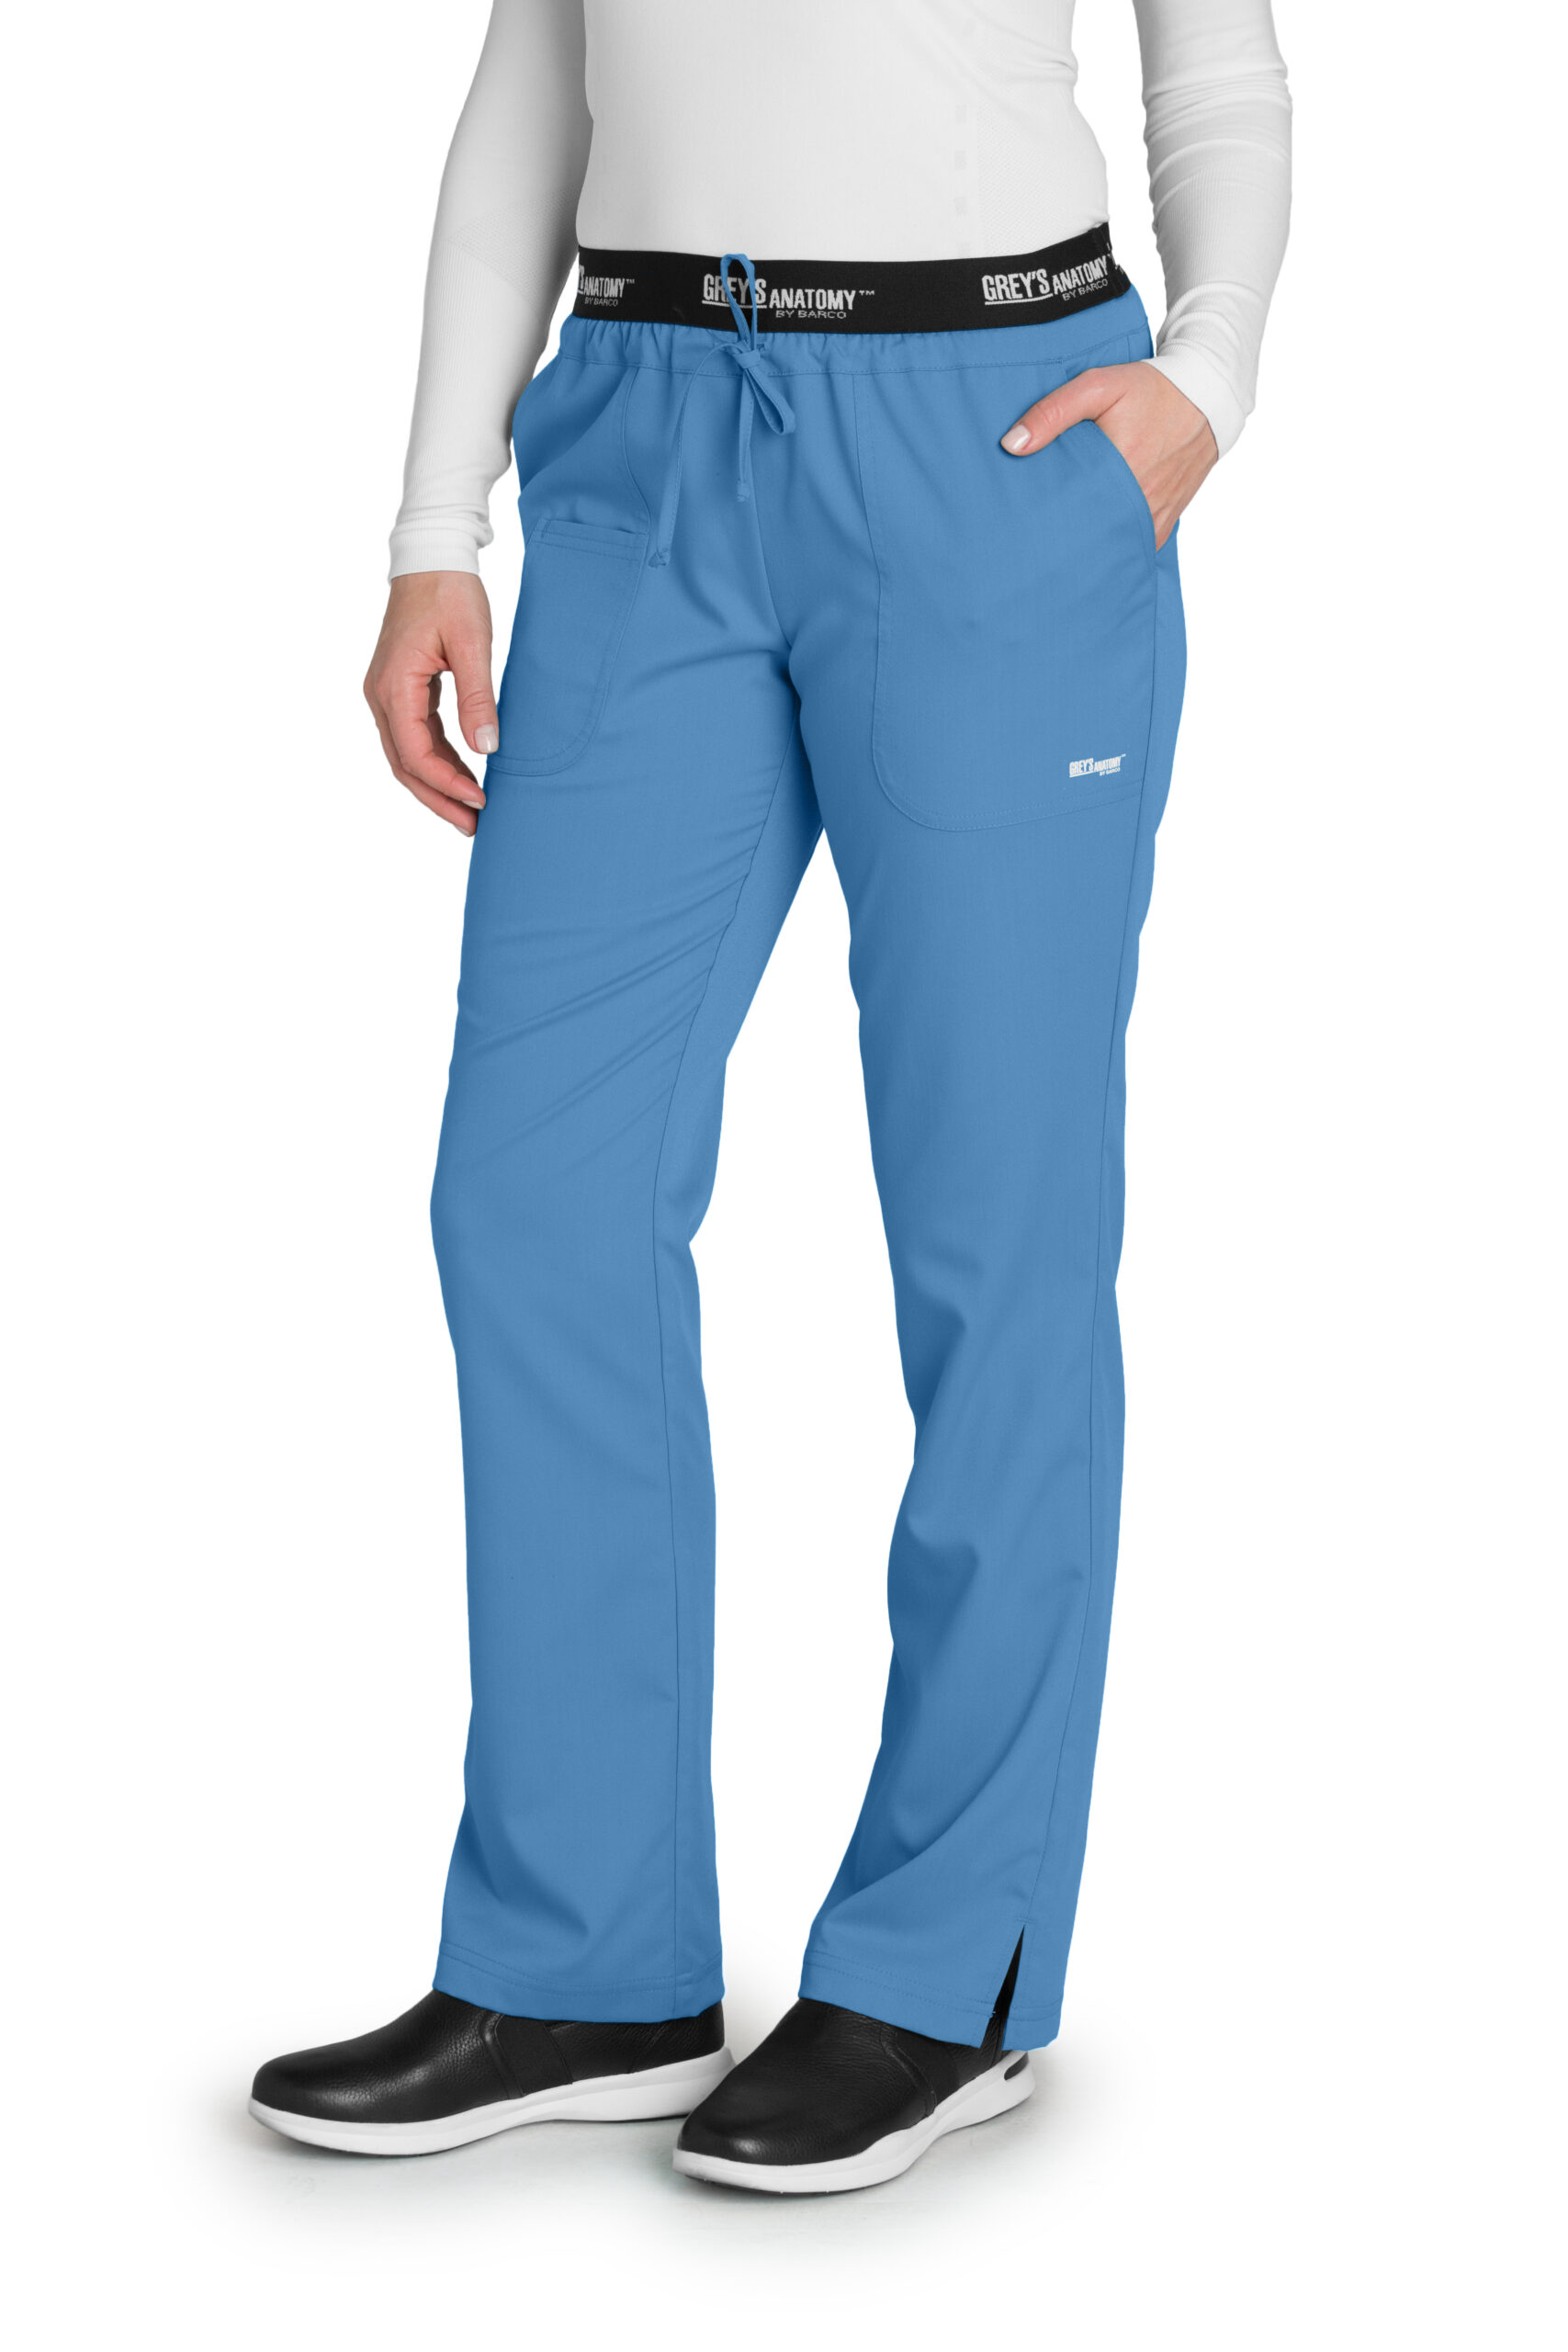 Grey's Anatomy Classic Aubrey Pant - 3 Pocket Scrub Pants in Ciel Blue ...